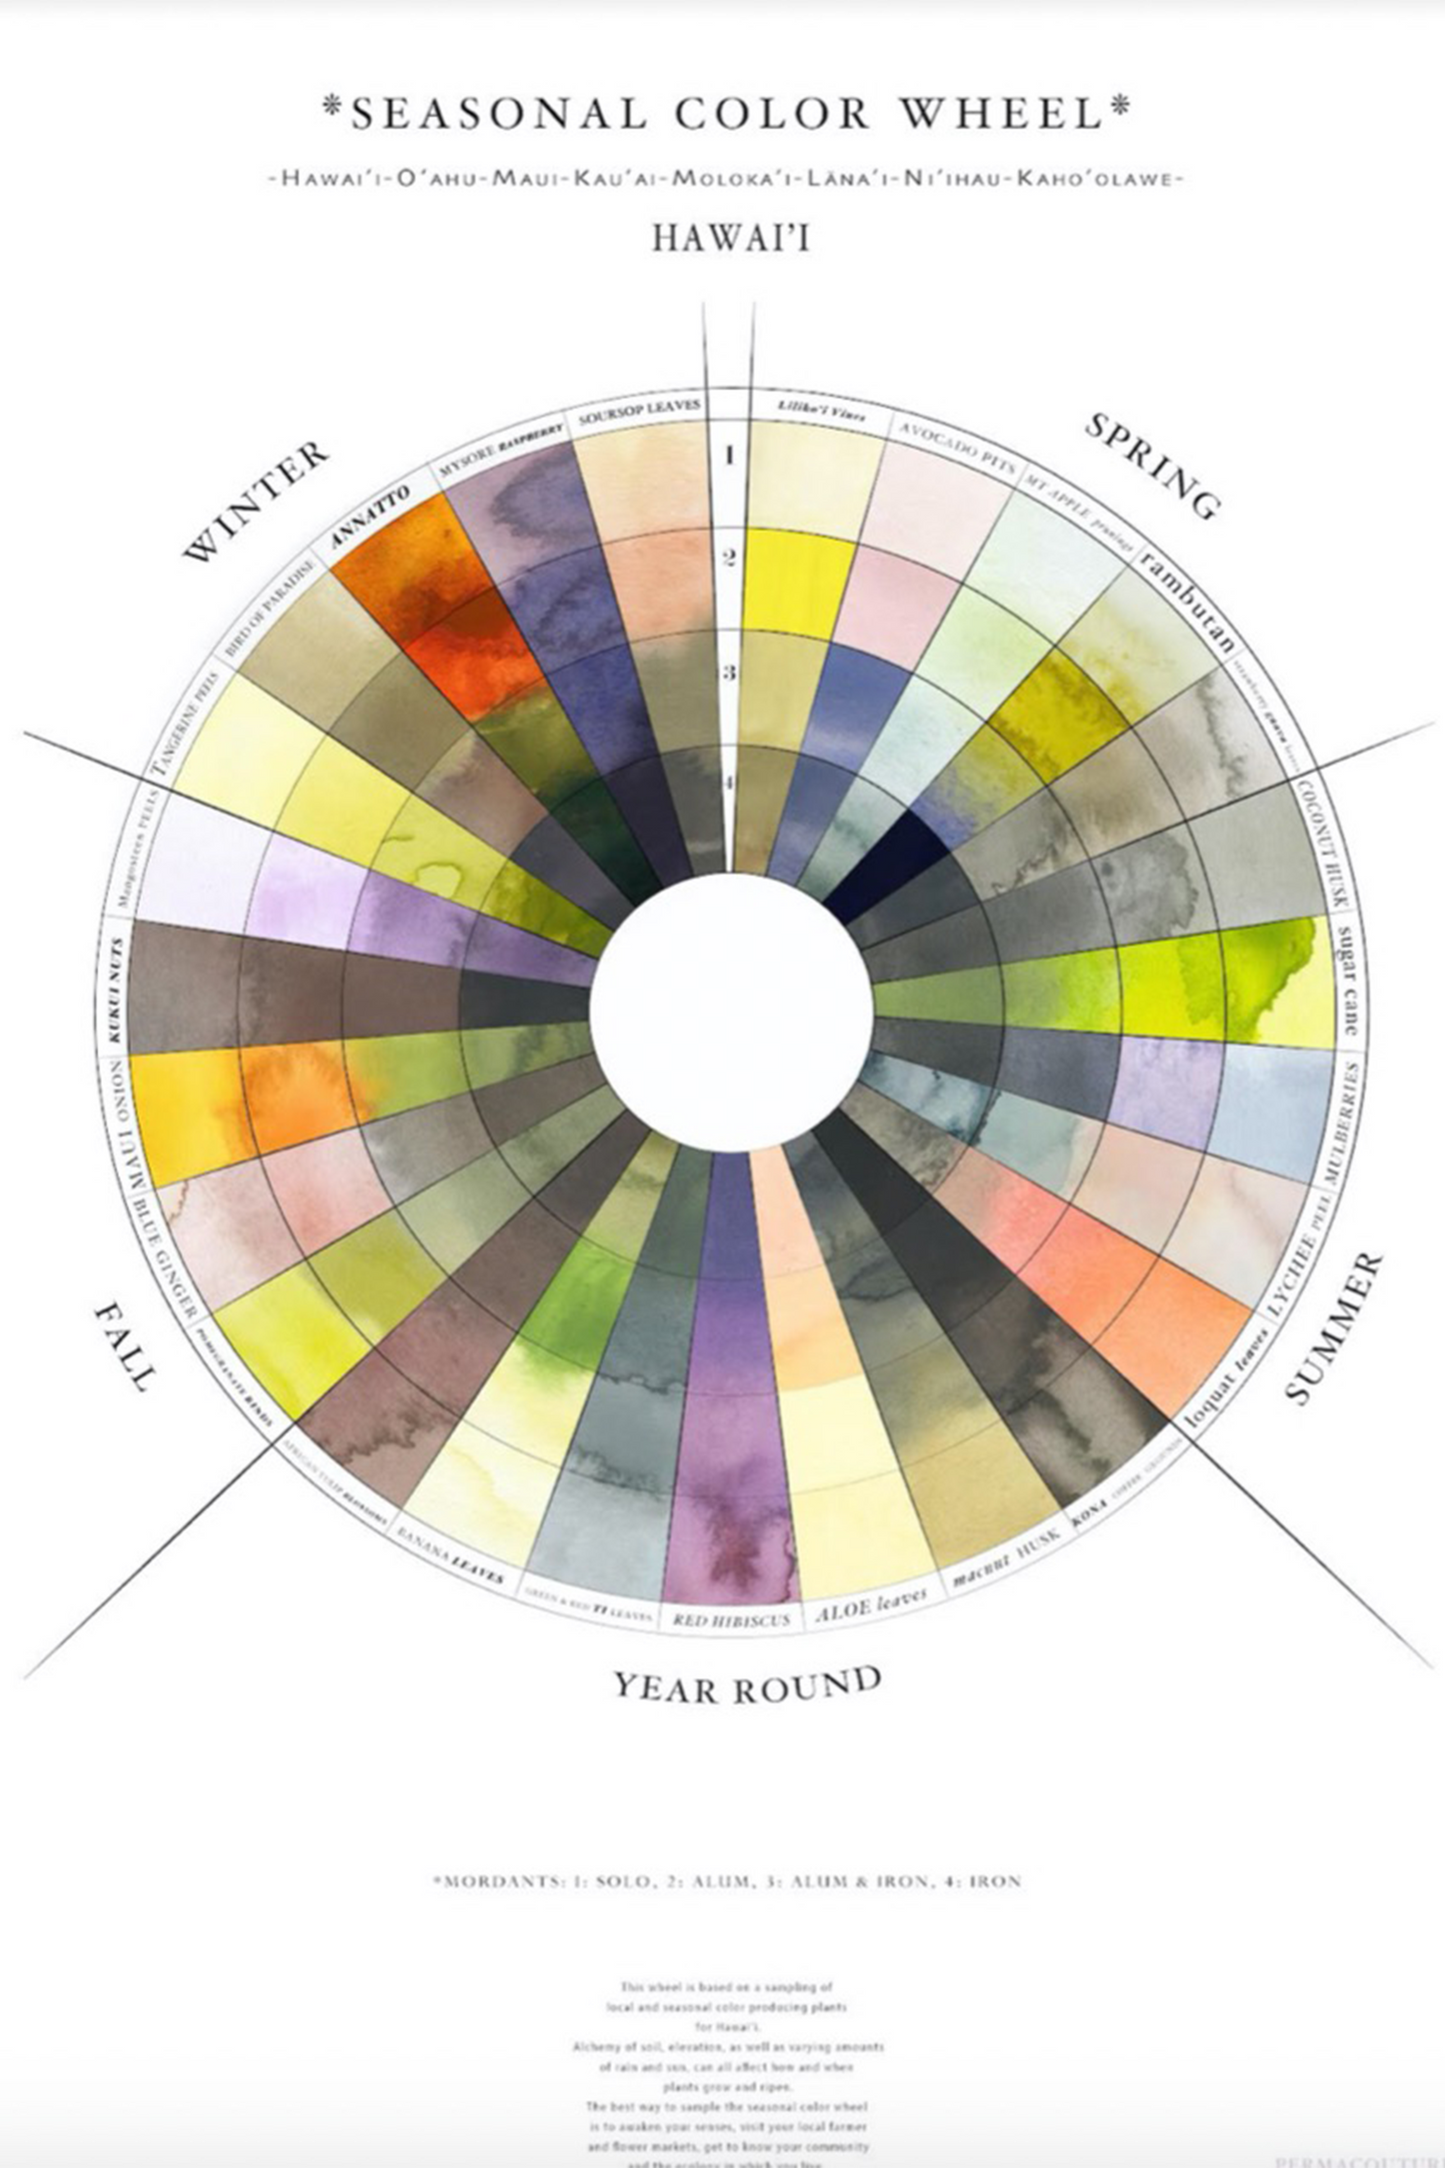 The Seasonal Color Wheel by Sasha Duerr - Hawai'i